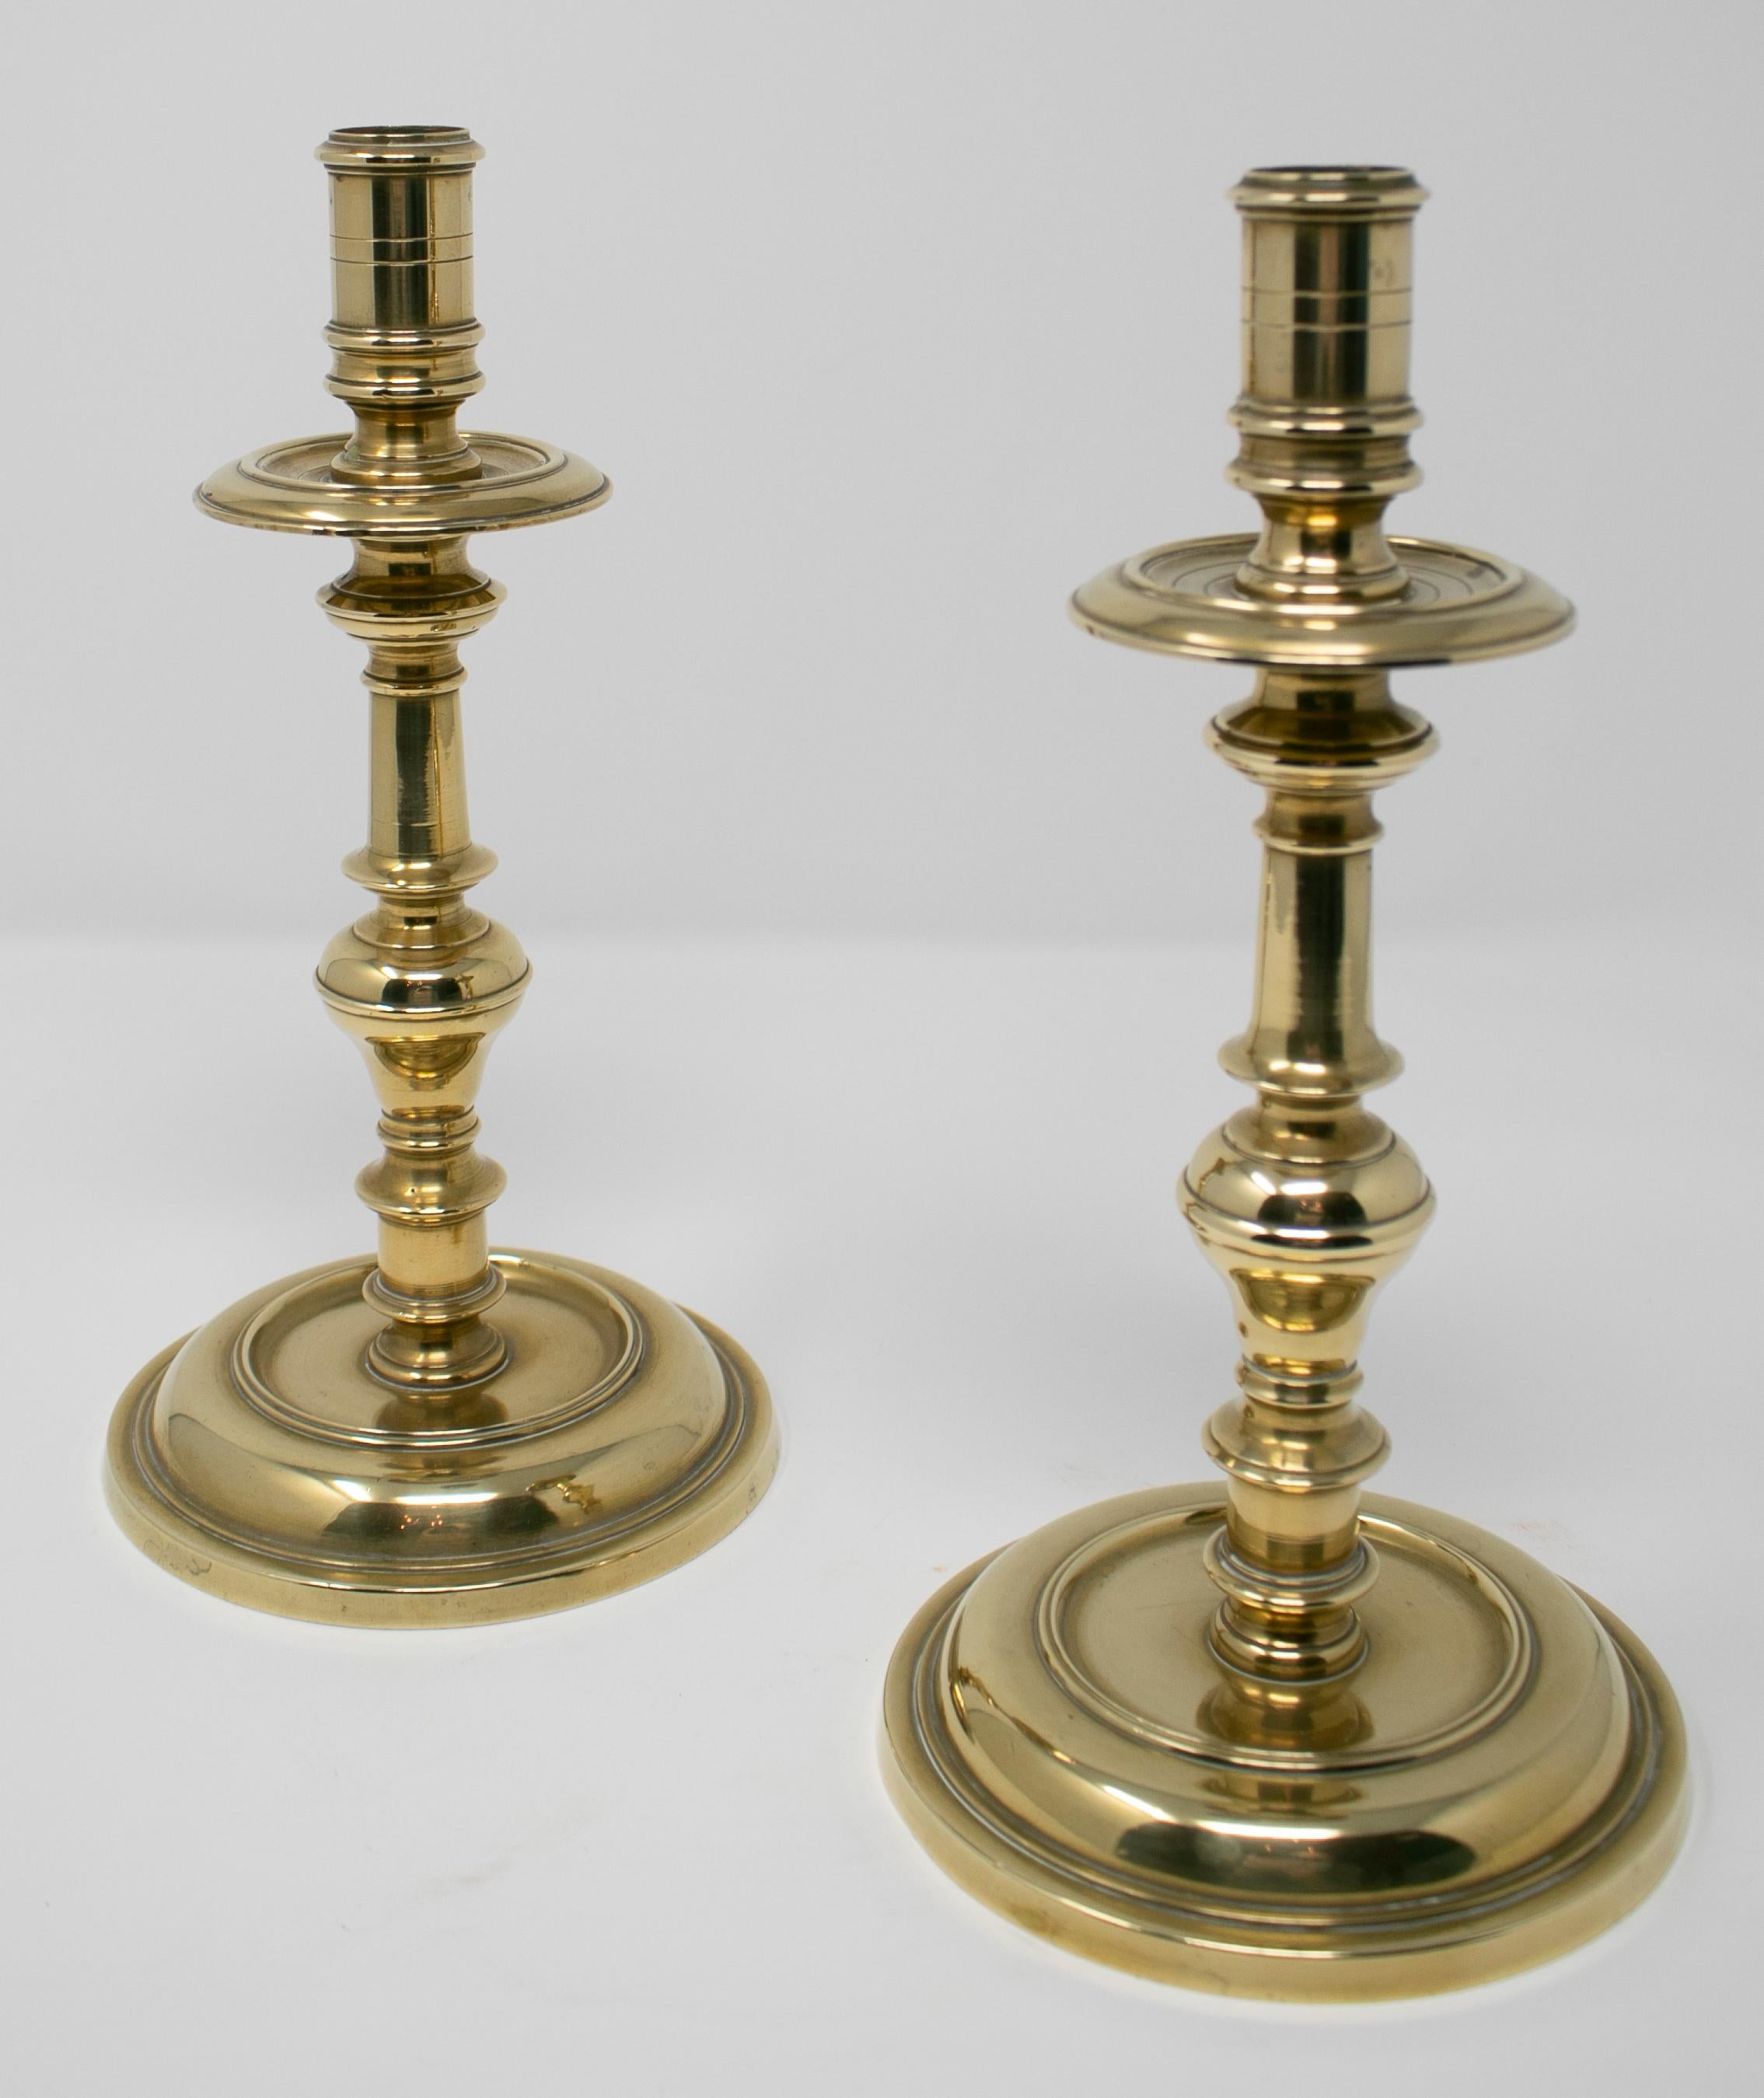 18th century Spanish pair of bronze candlesticks.